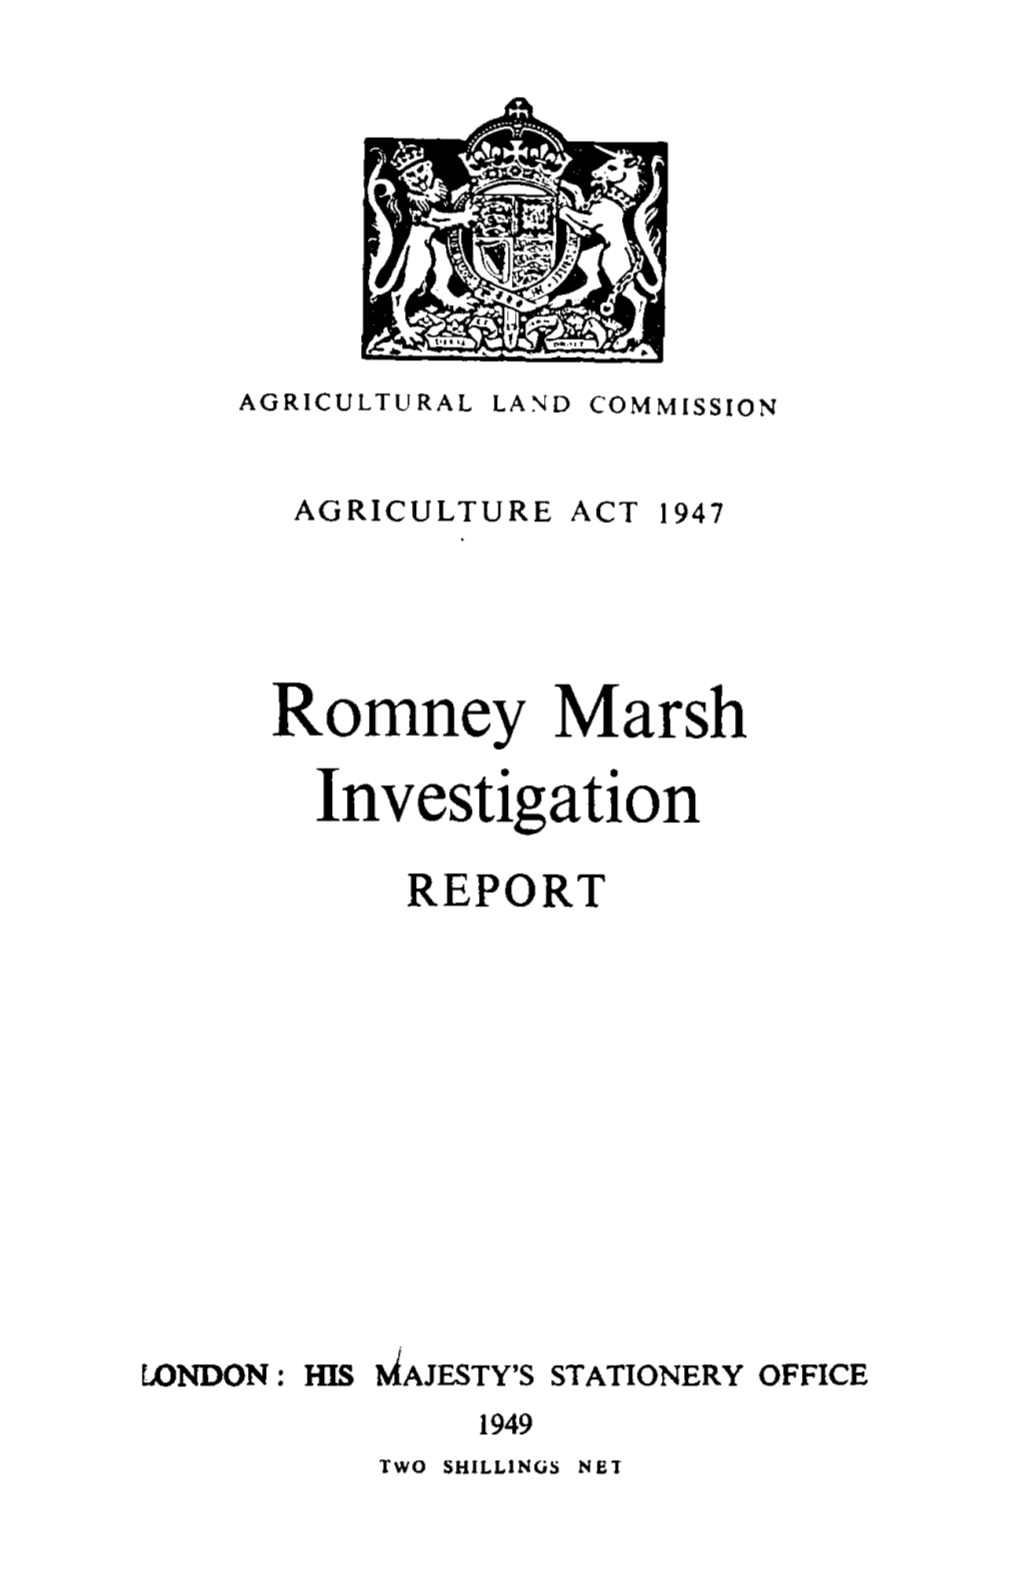 Romney Marsh Investigation REPORT